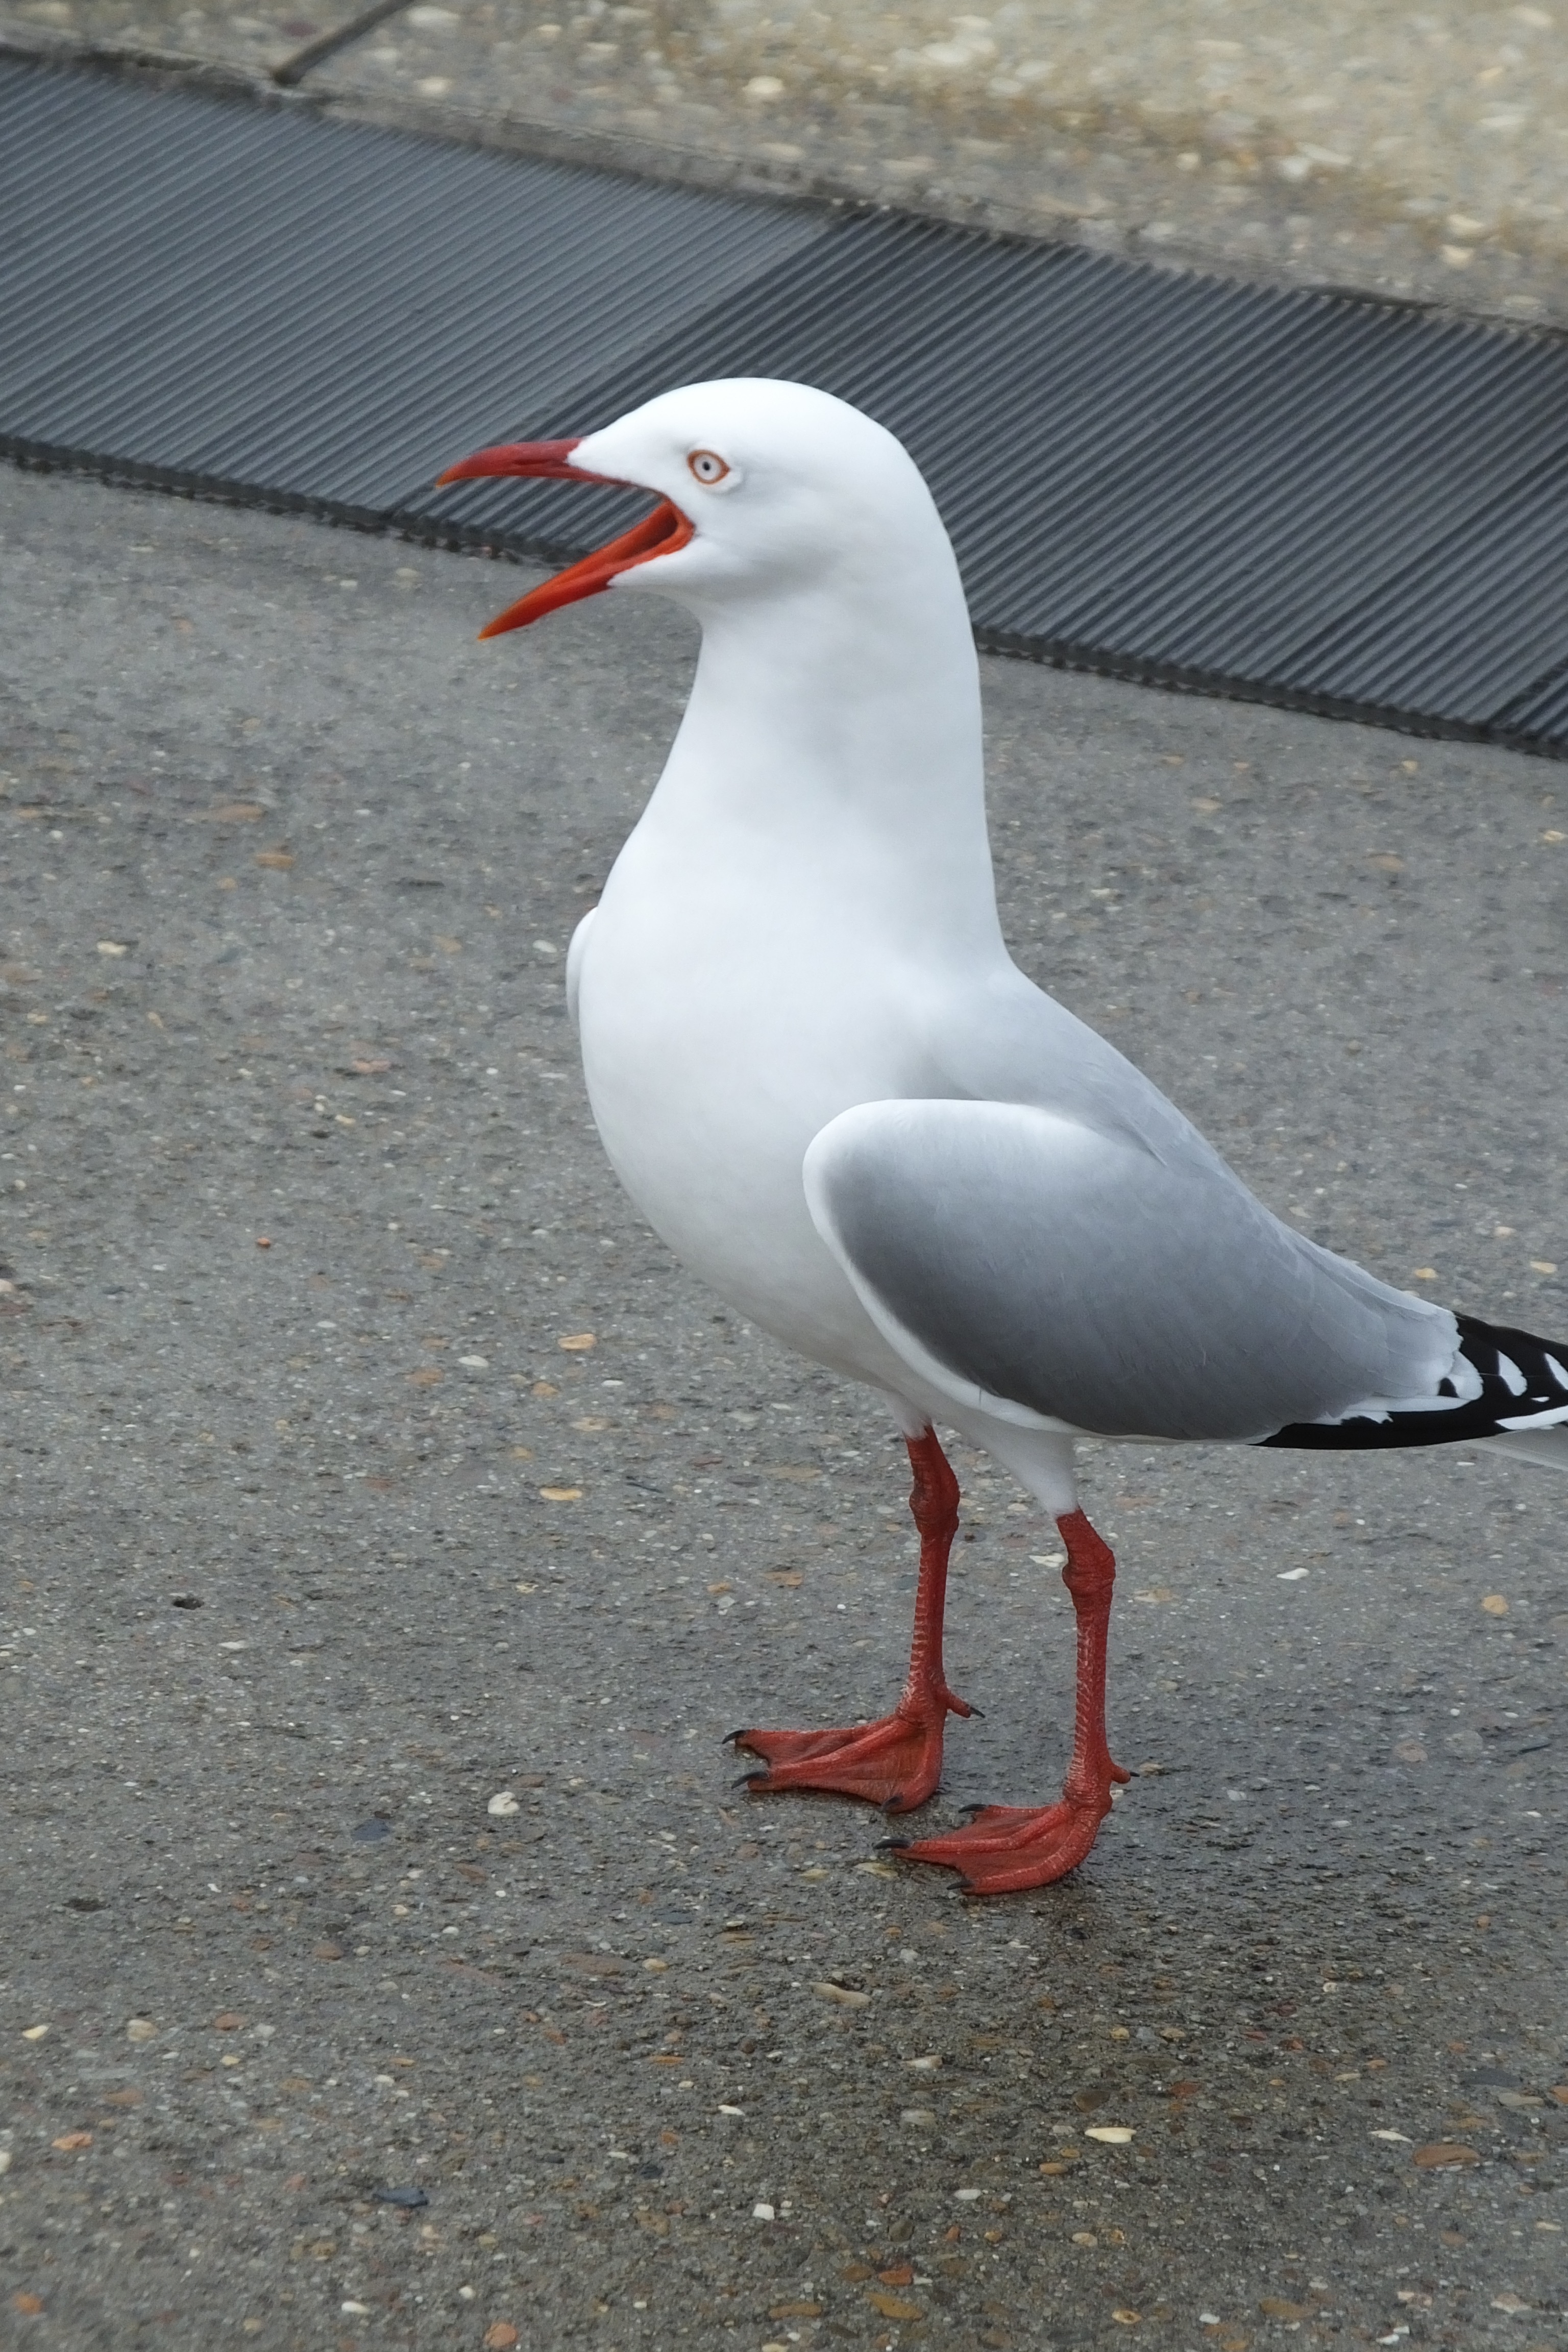 Do seagulls have webbed feet?